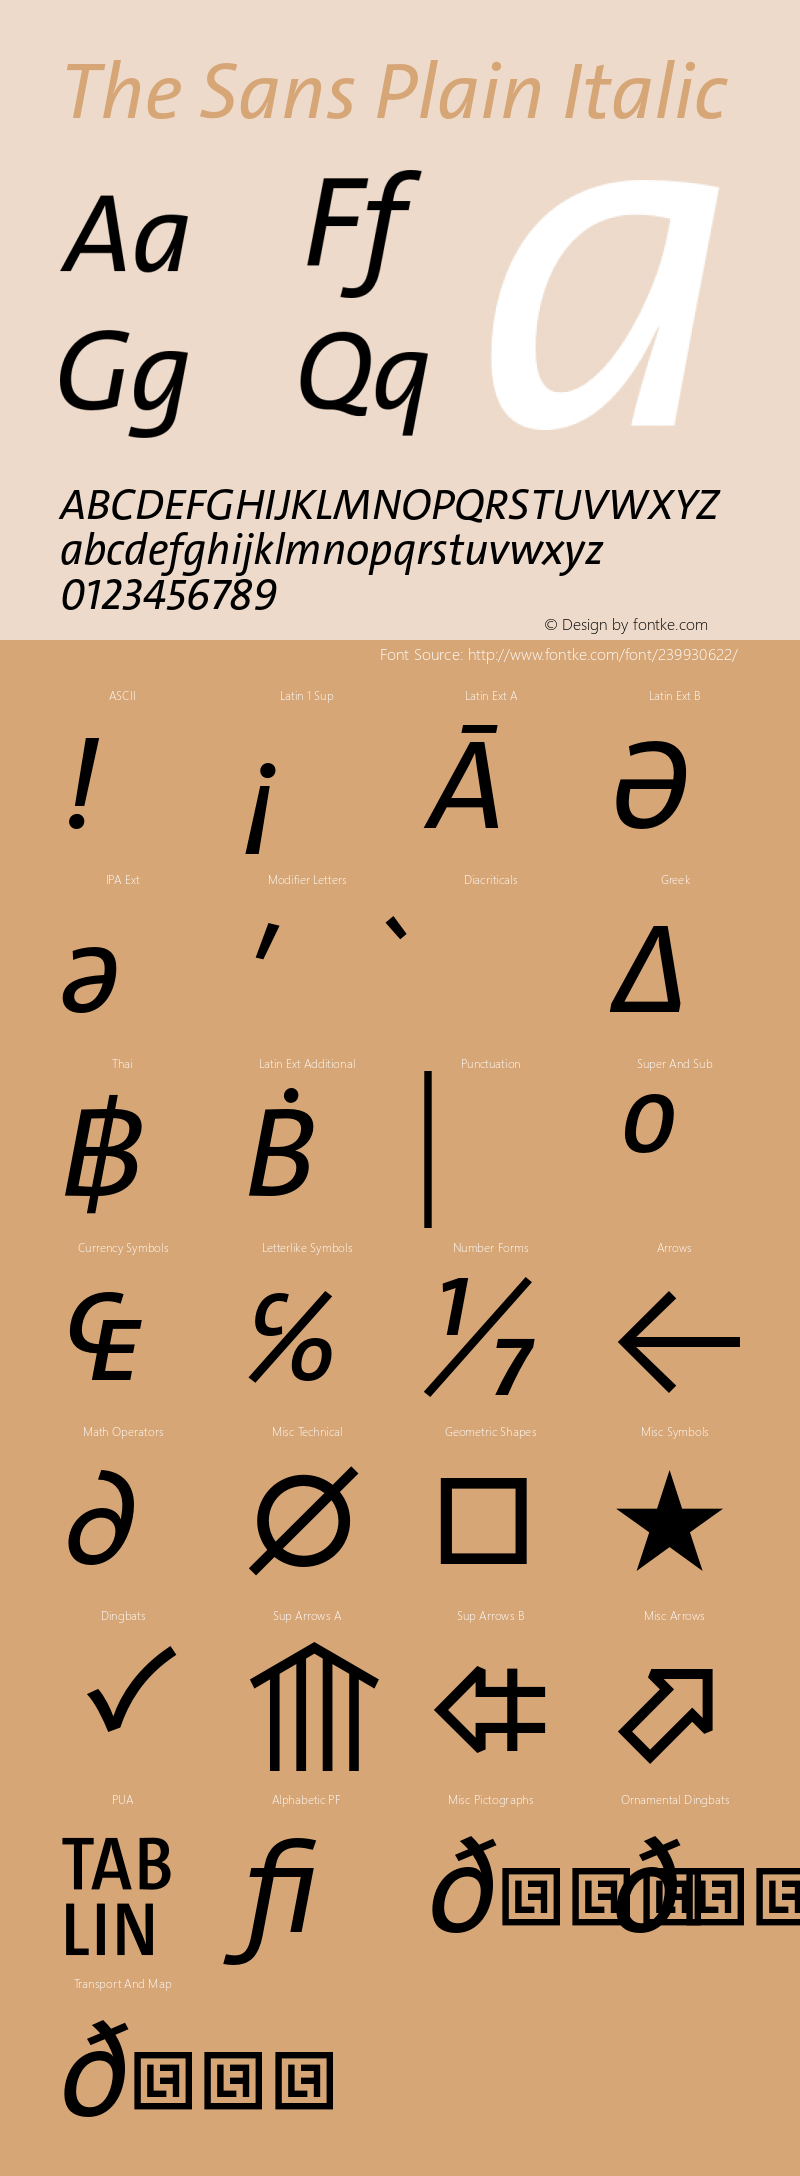 The Sans Plain Italic Version 3.771图片样张